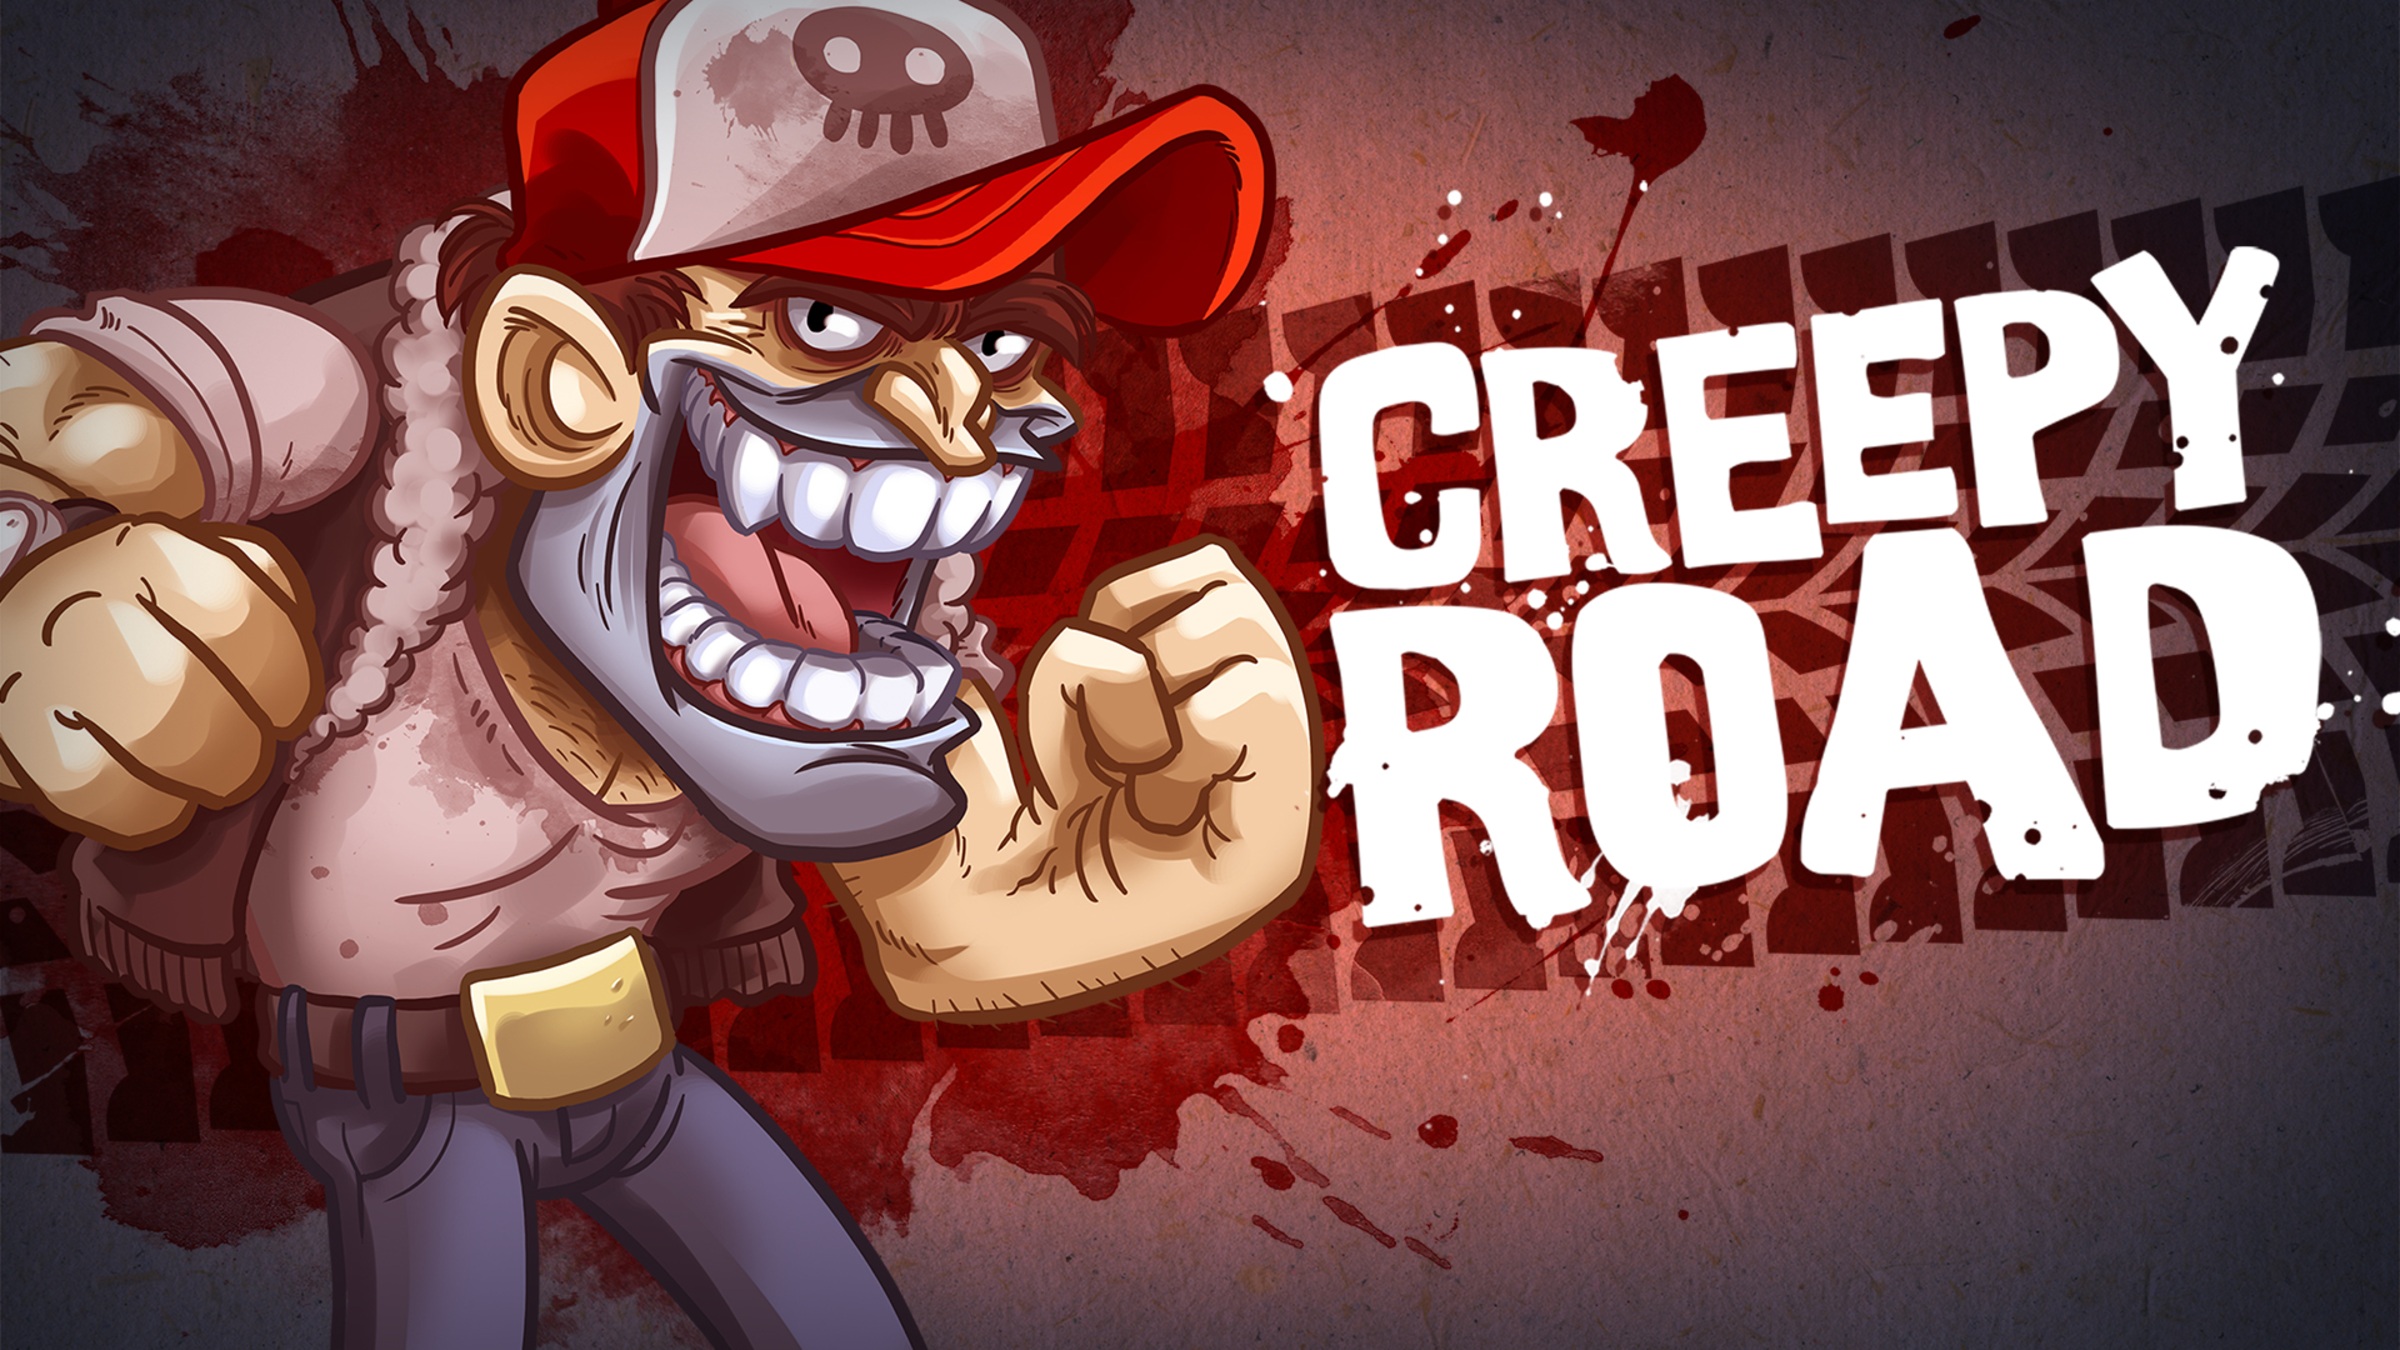 Creeps games. Creepy Road. Creepy Road 2. Creepy Road Art game.